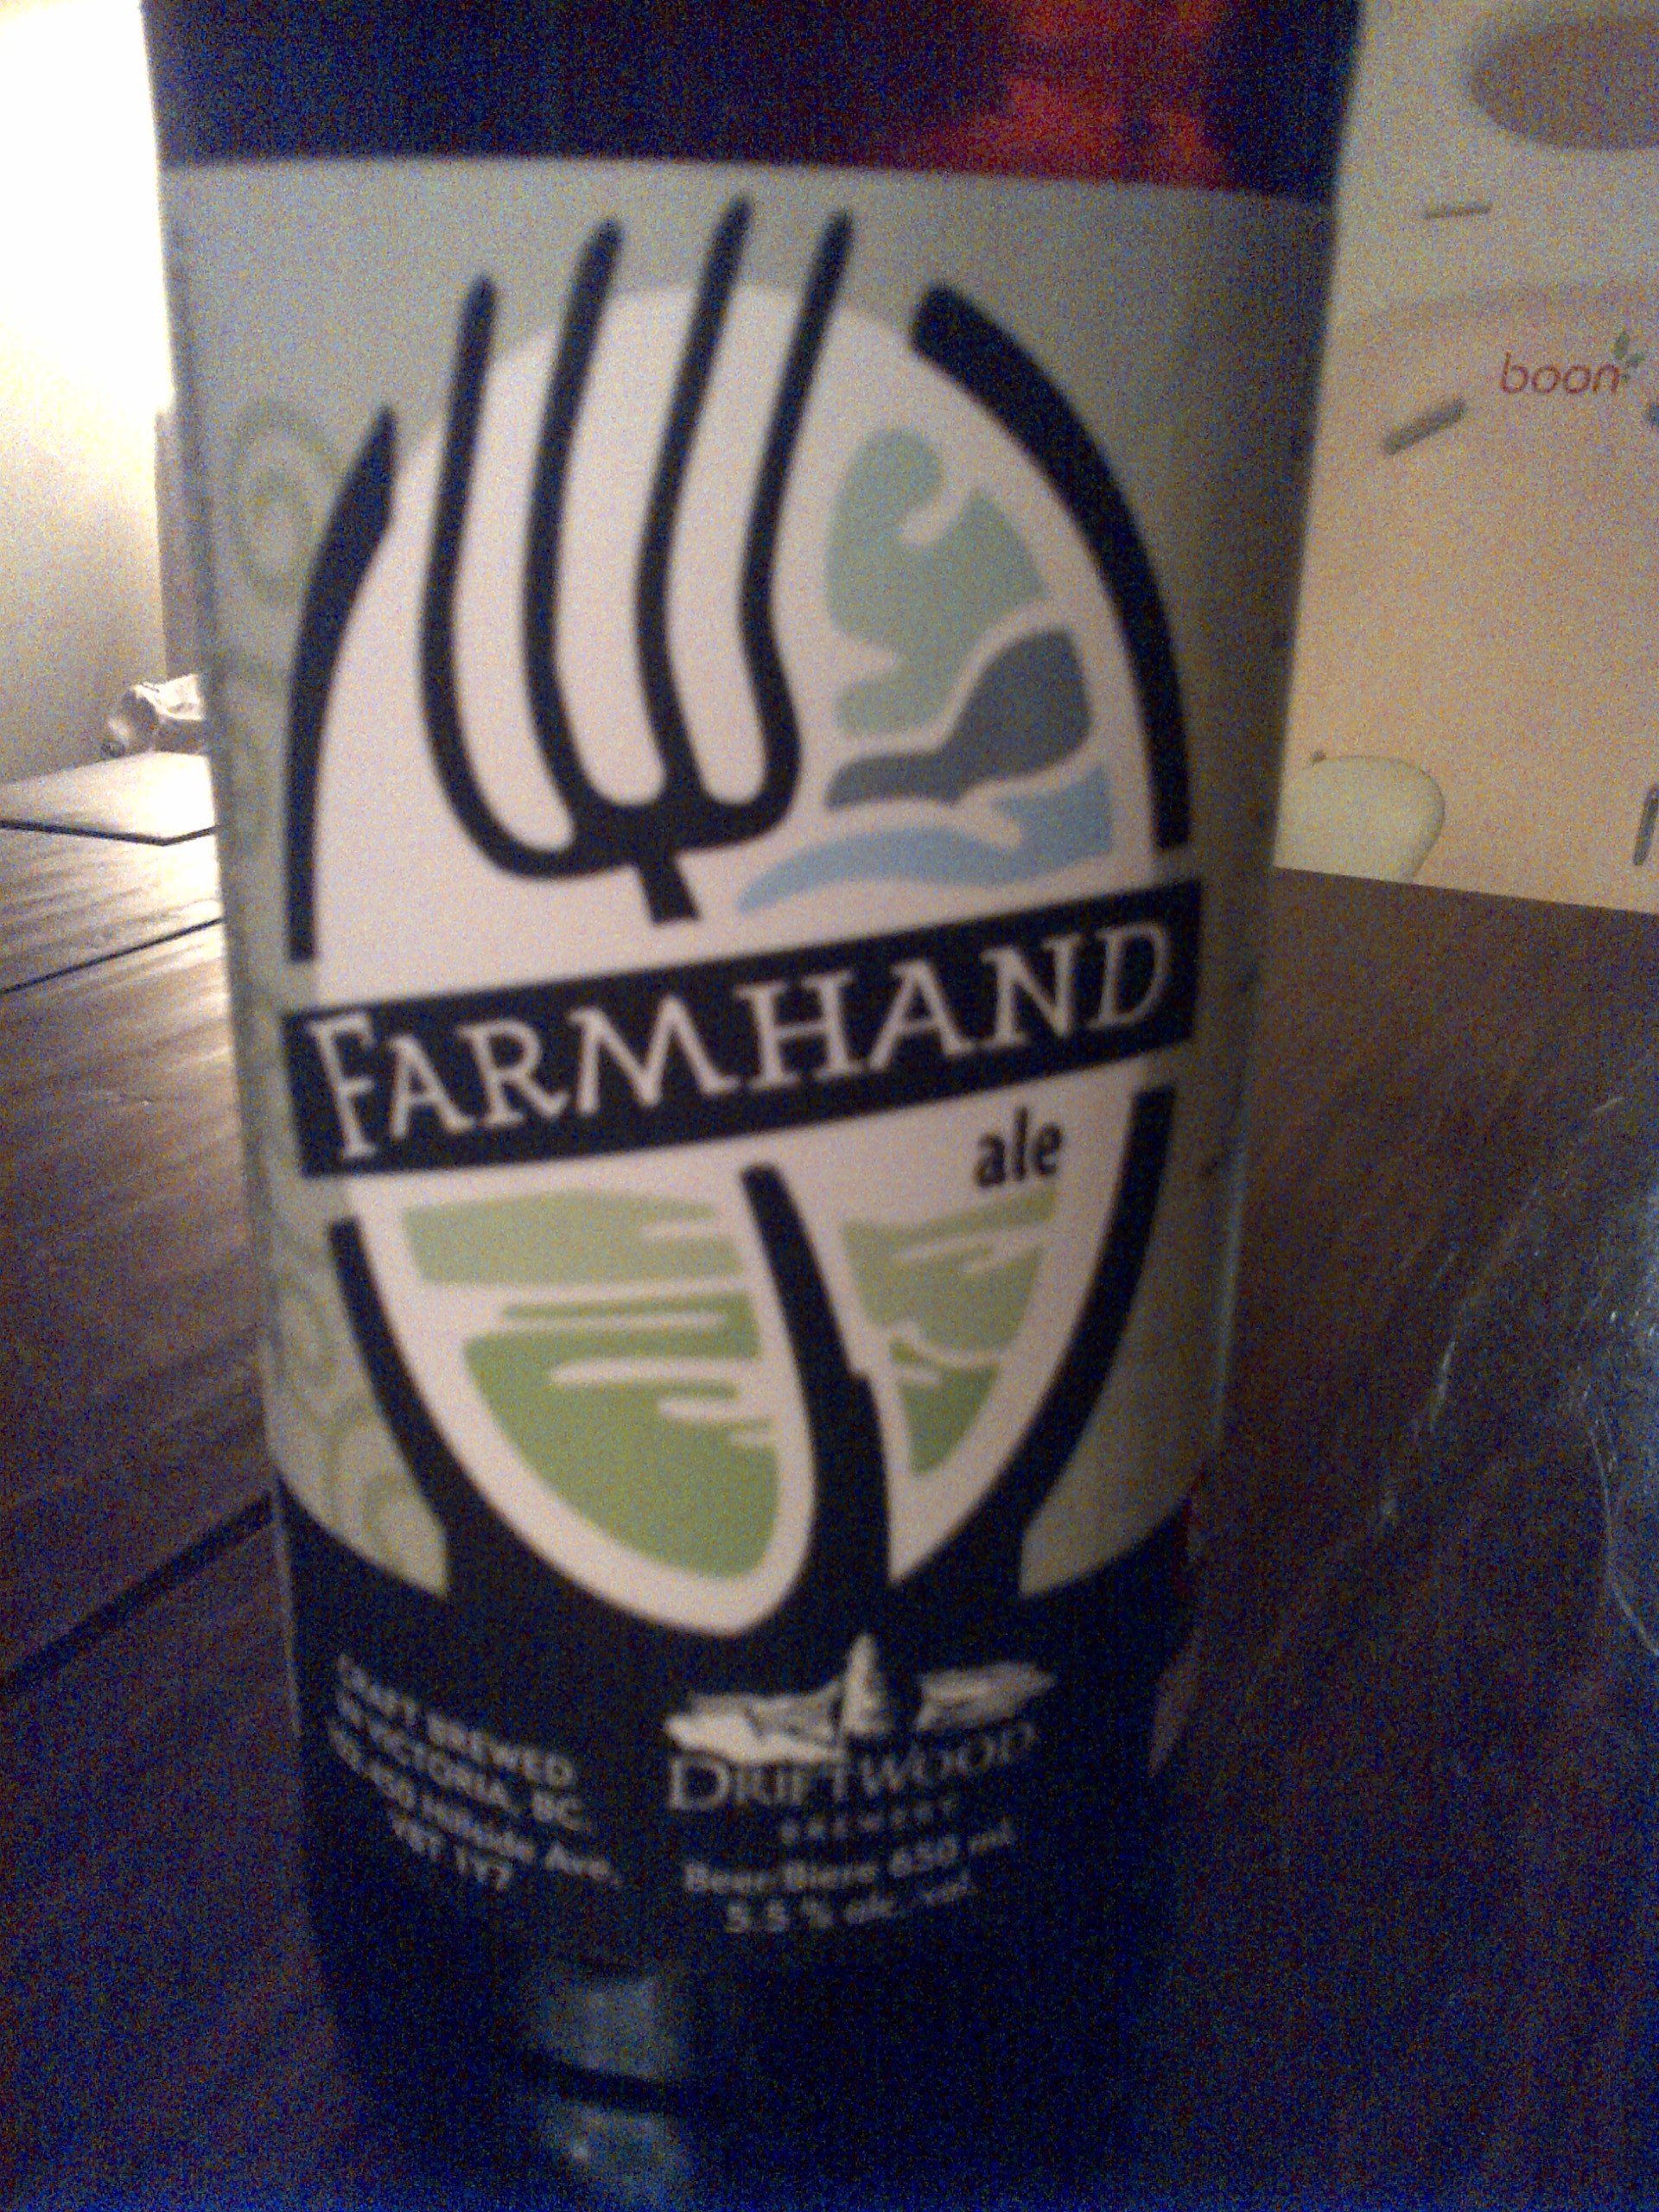  Driftwood Brewery's Farmhand Ale for a farmhand 